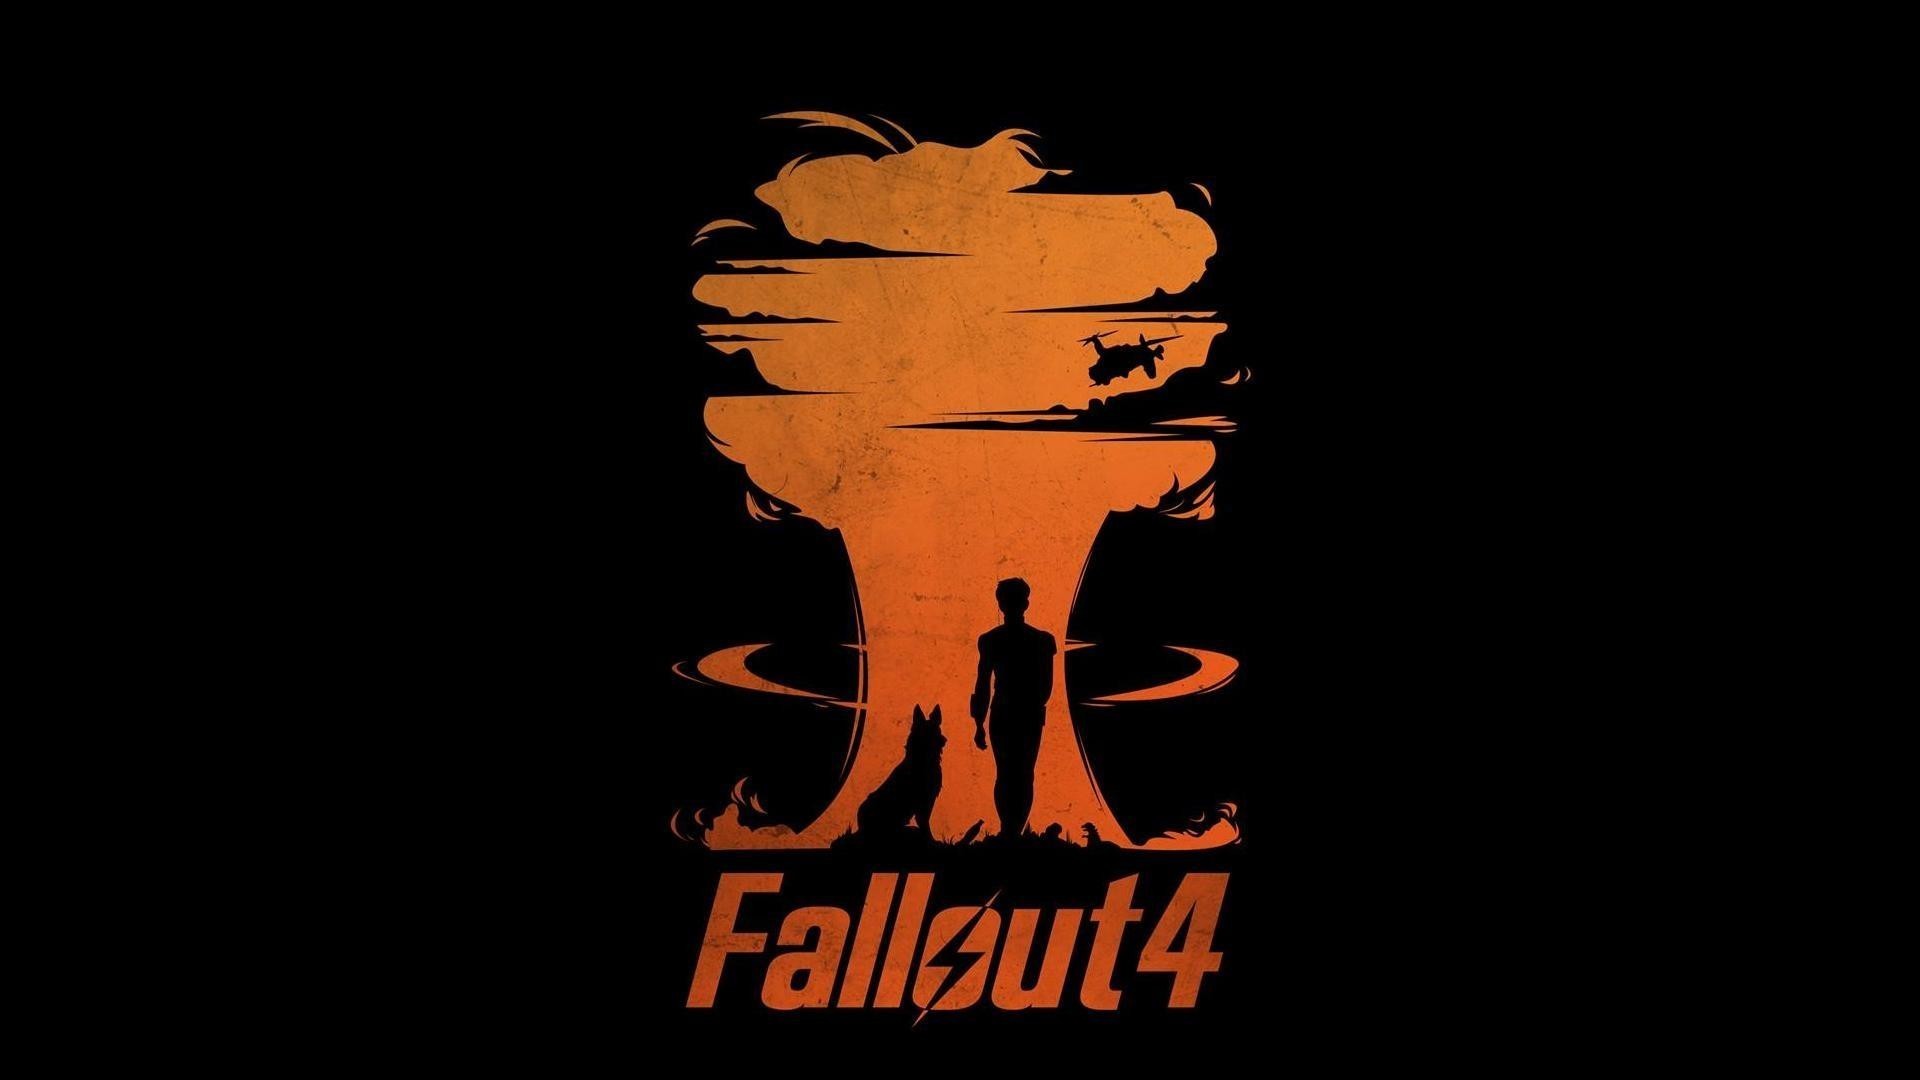 1920x1080 Fallout Logo Wallpaper Hd Best Of Fallout 4 Wallpaper Phone 61 Images Of  Fallout Logo Wallpaper